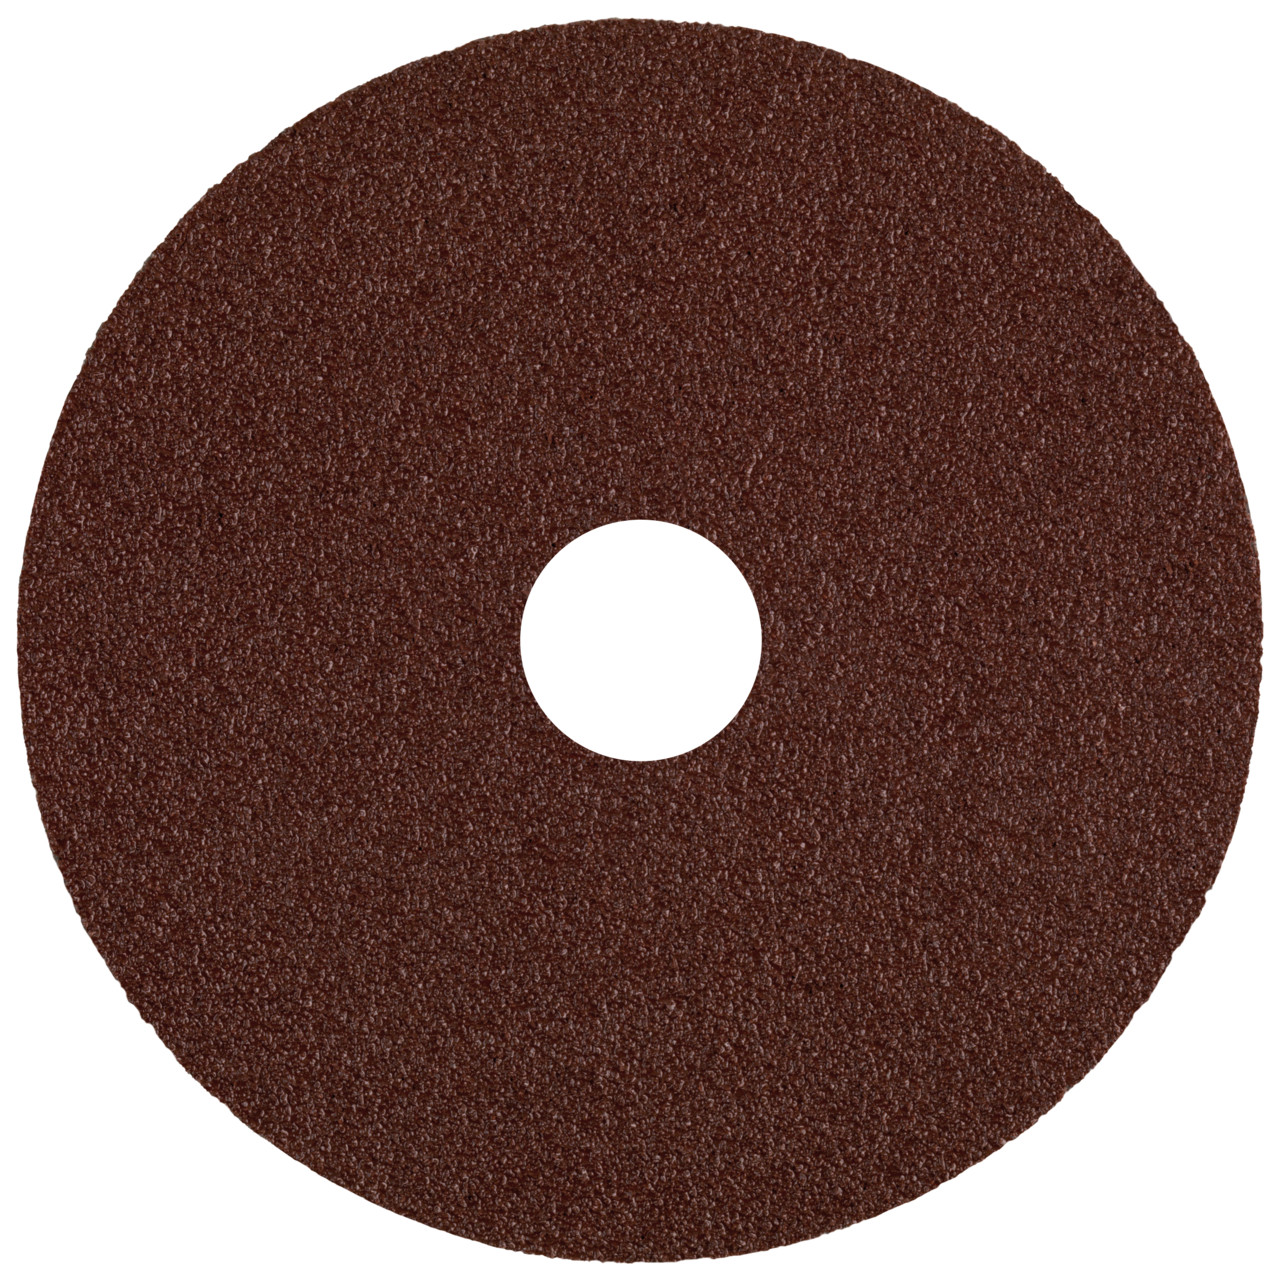 Tyrolit A-B02 V Vulcanised fibre disc DxH 115x22 For steel, non-ferrous metals and wood, P100, shape: DISC, Art. 34286497